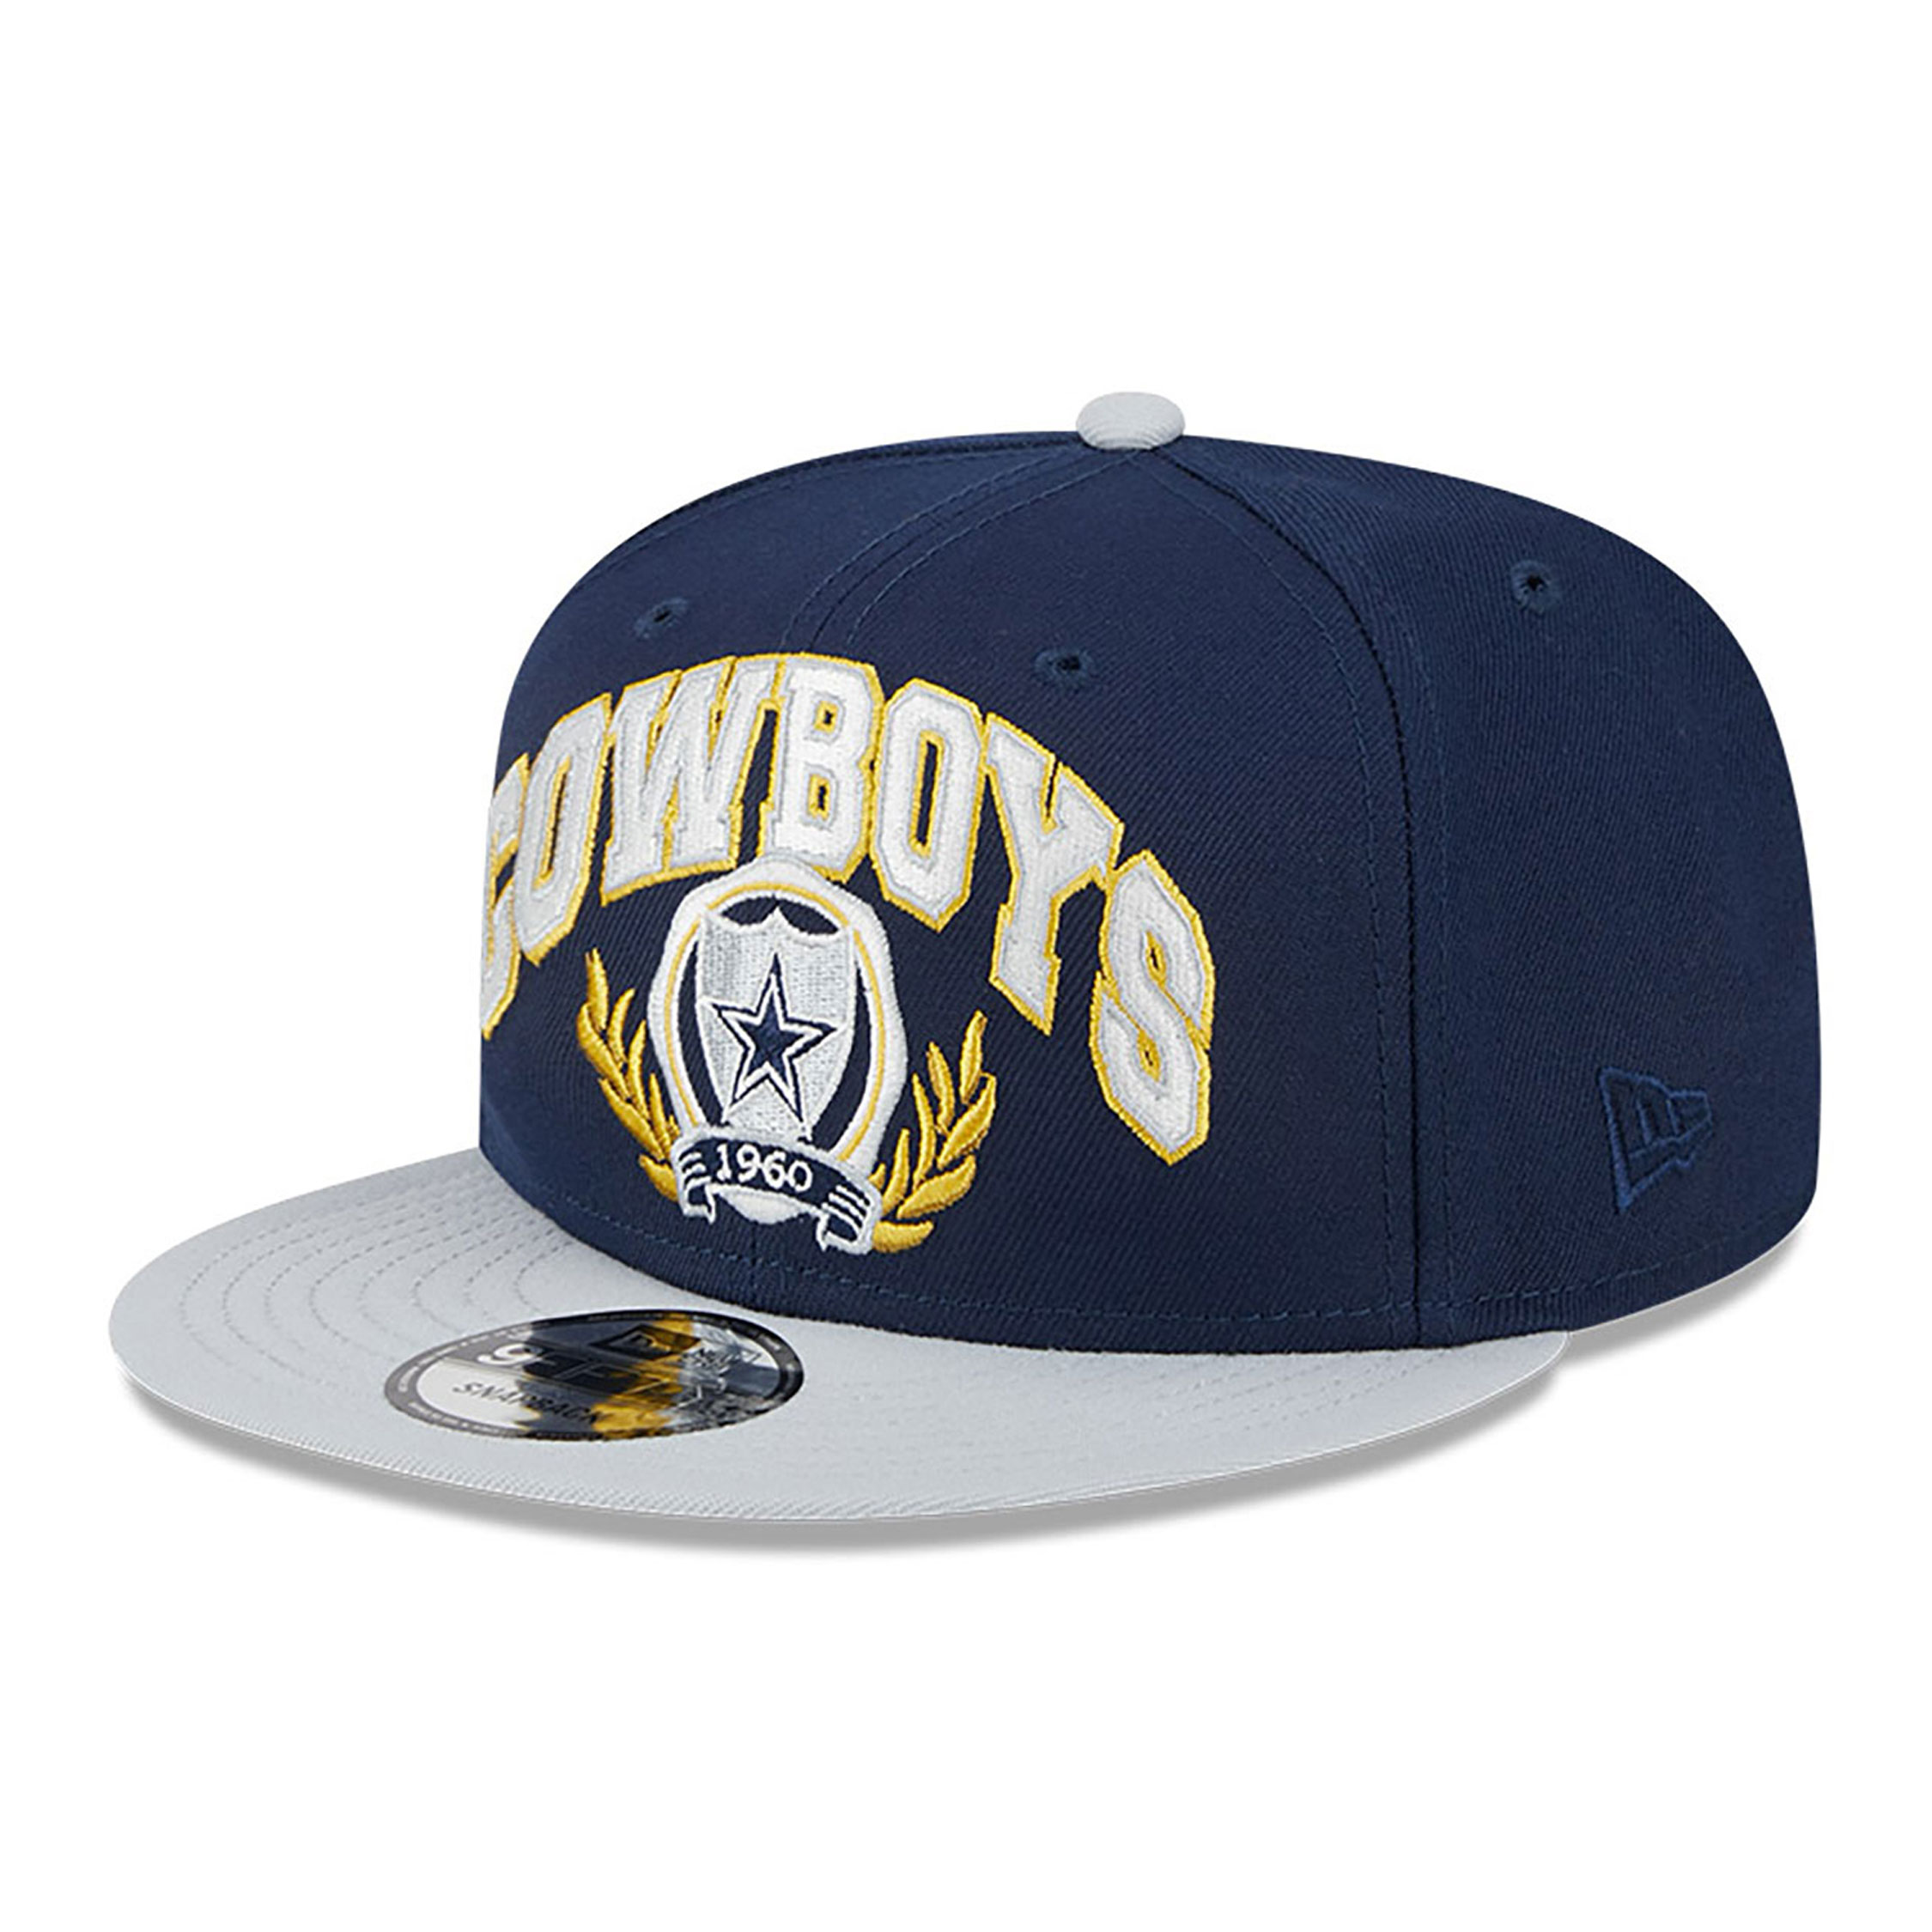 Dallas Cowboys Caps, Hats & Clothing